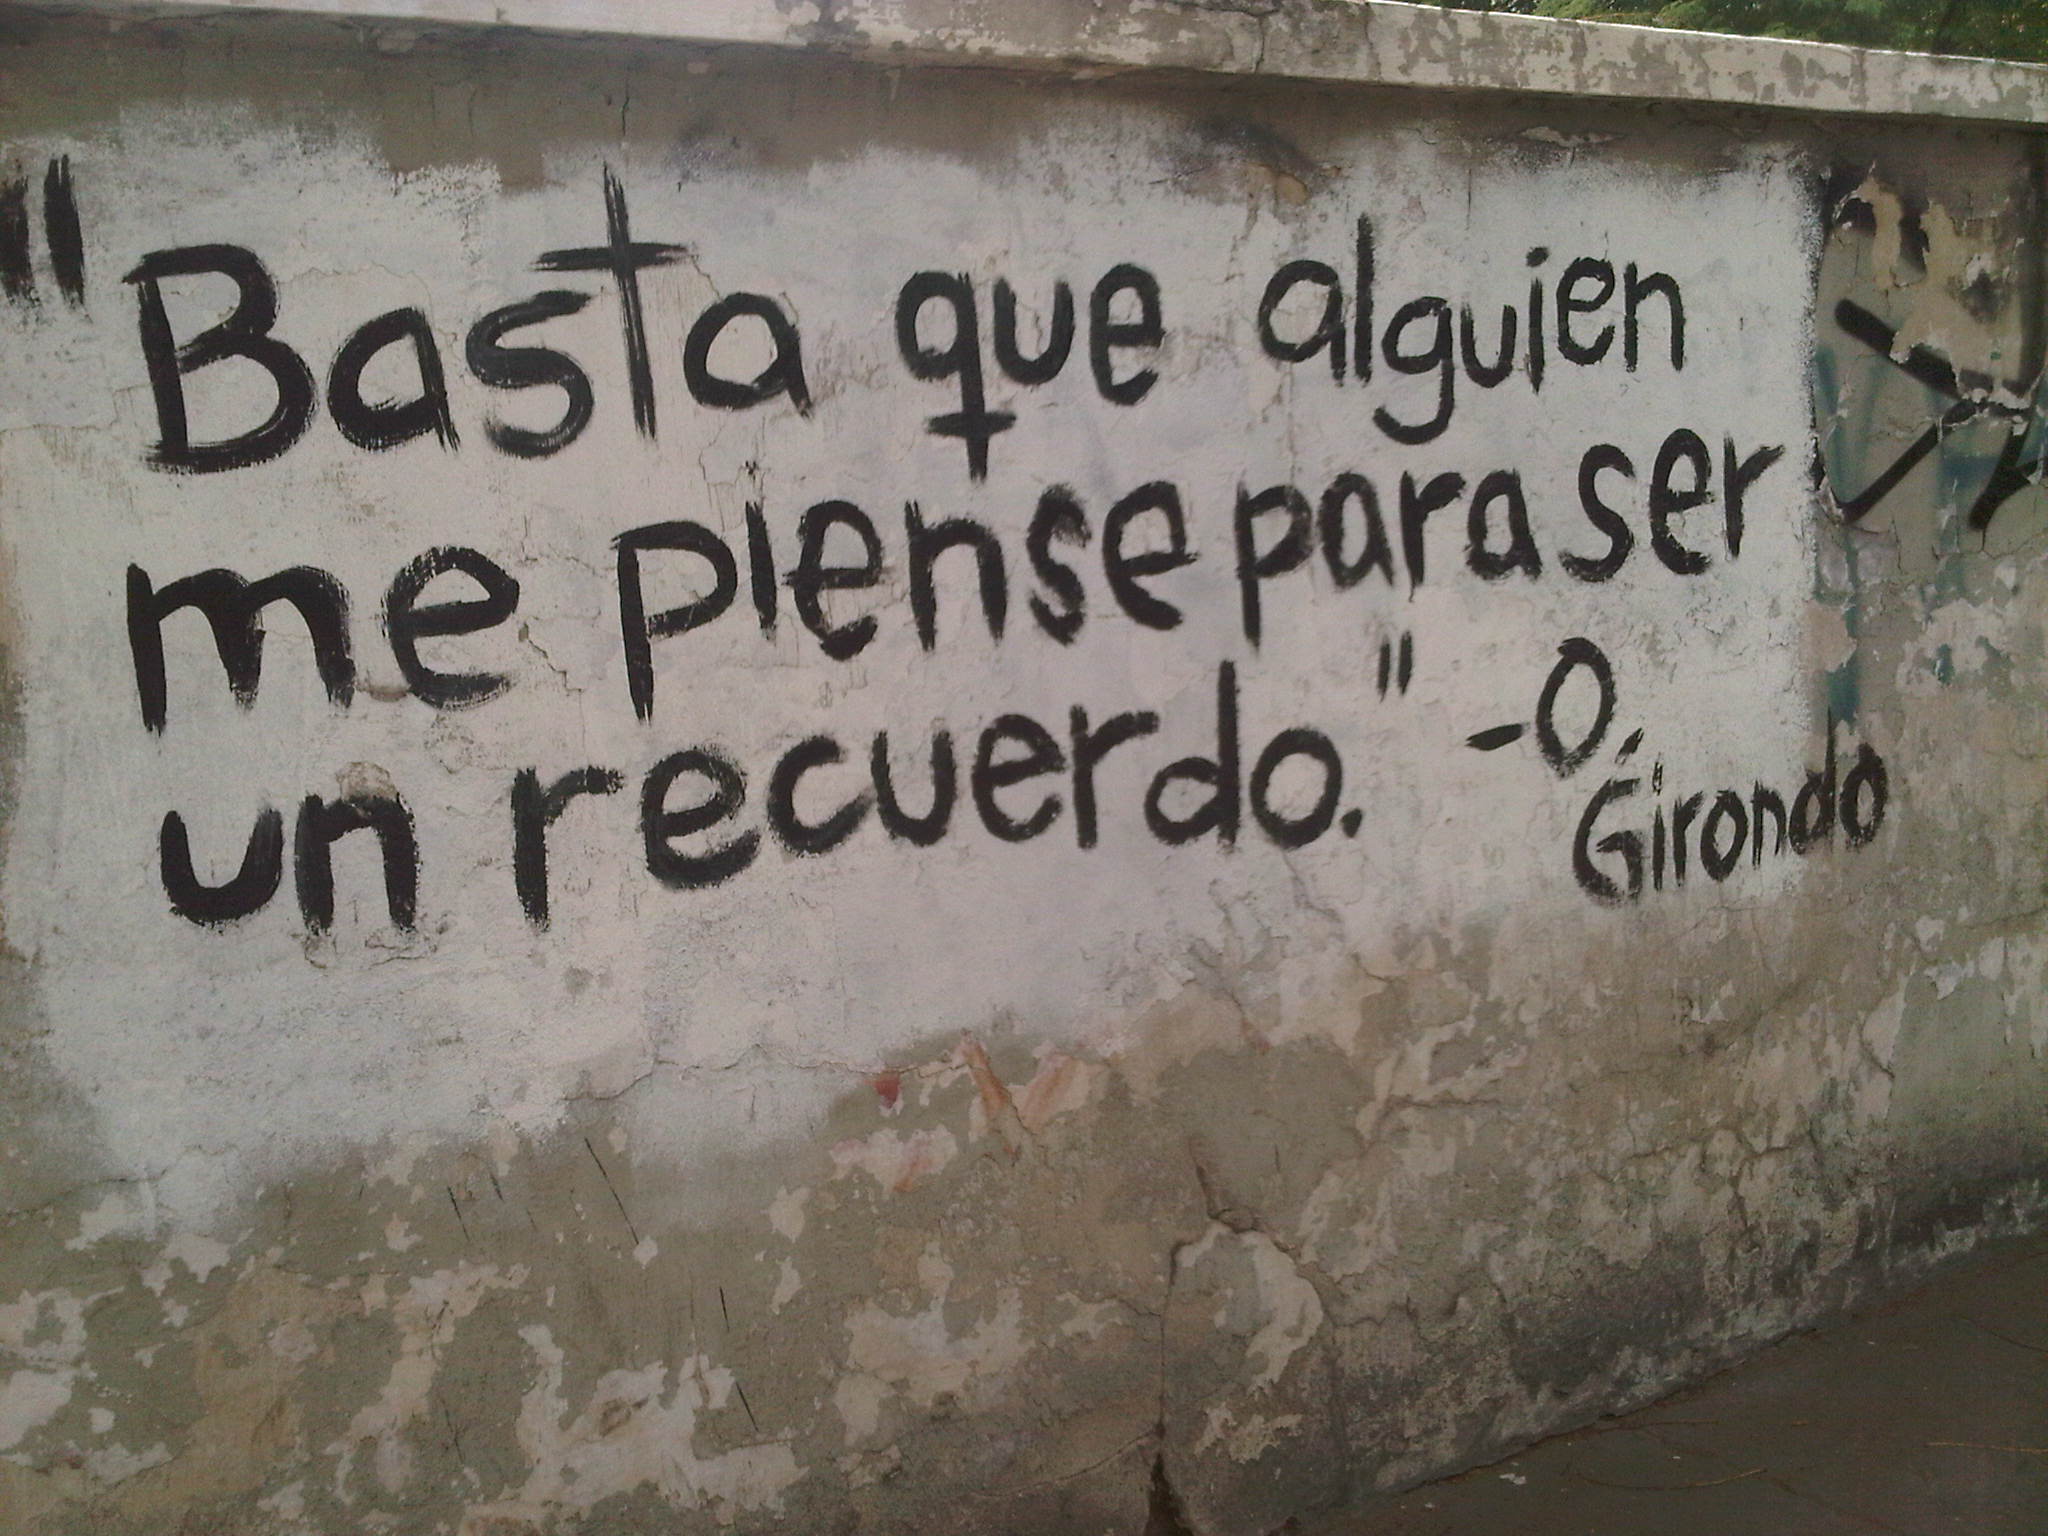 Grafitti que presenta una frase: "Basta que alguien me piense para ser un recuerdo" Girondo